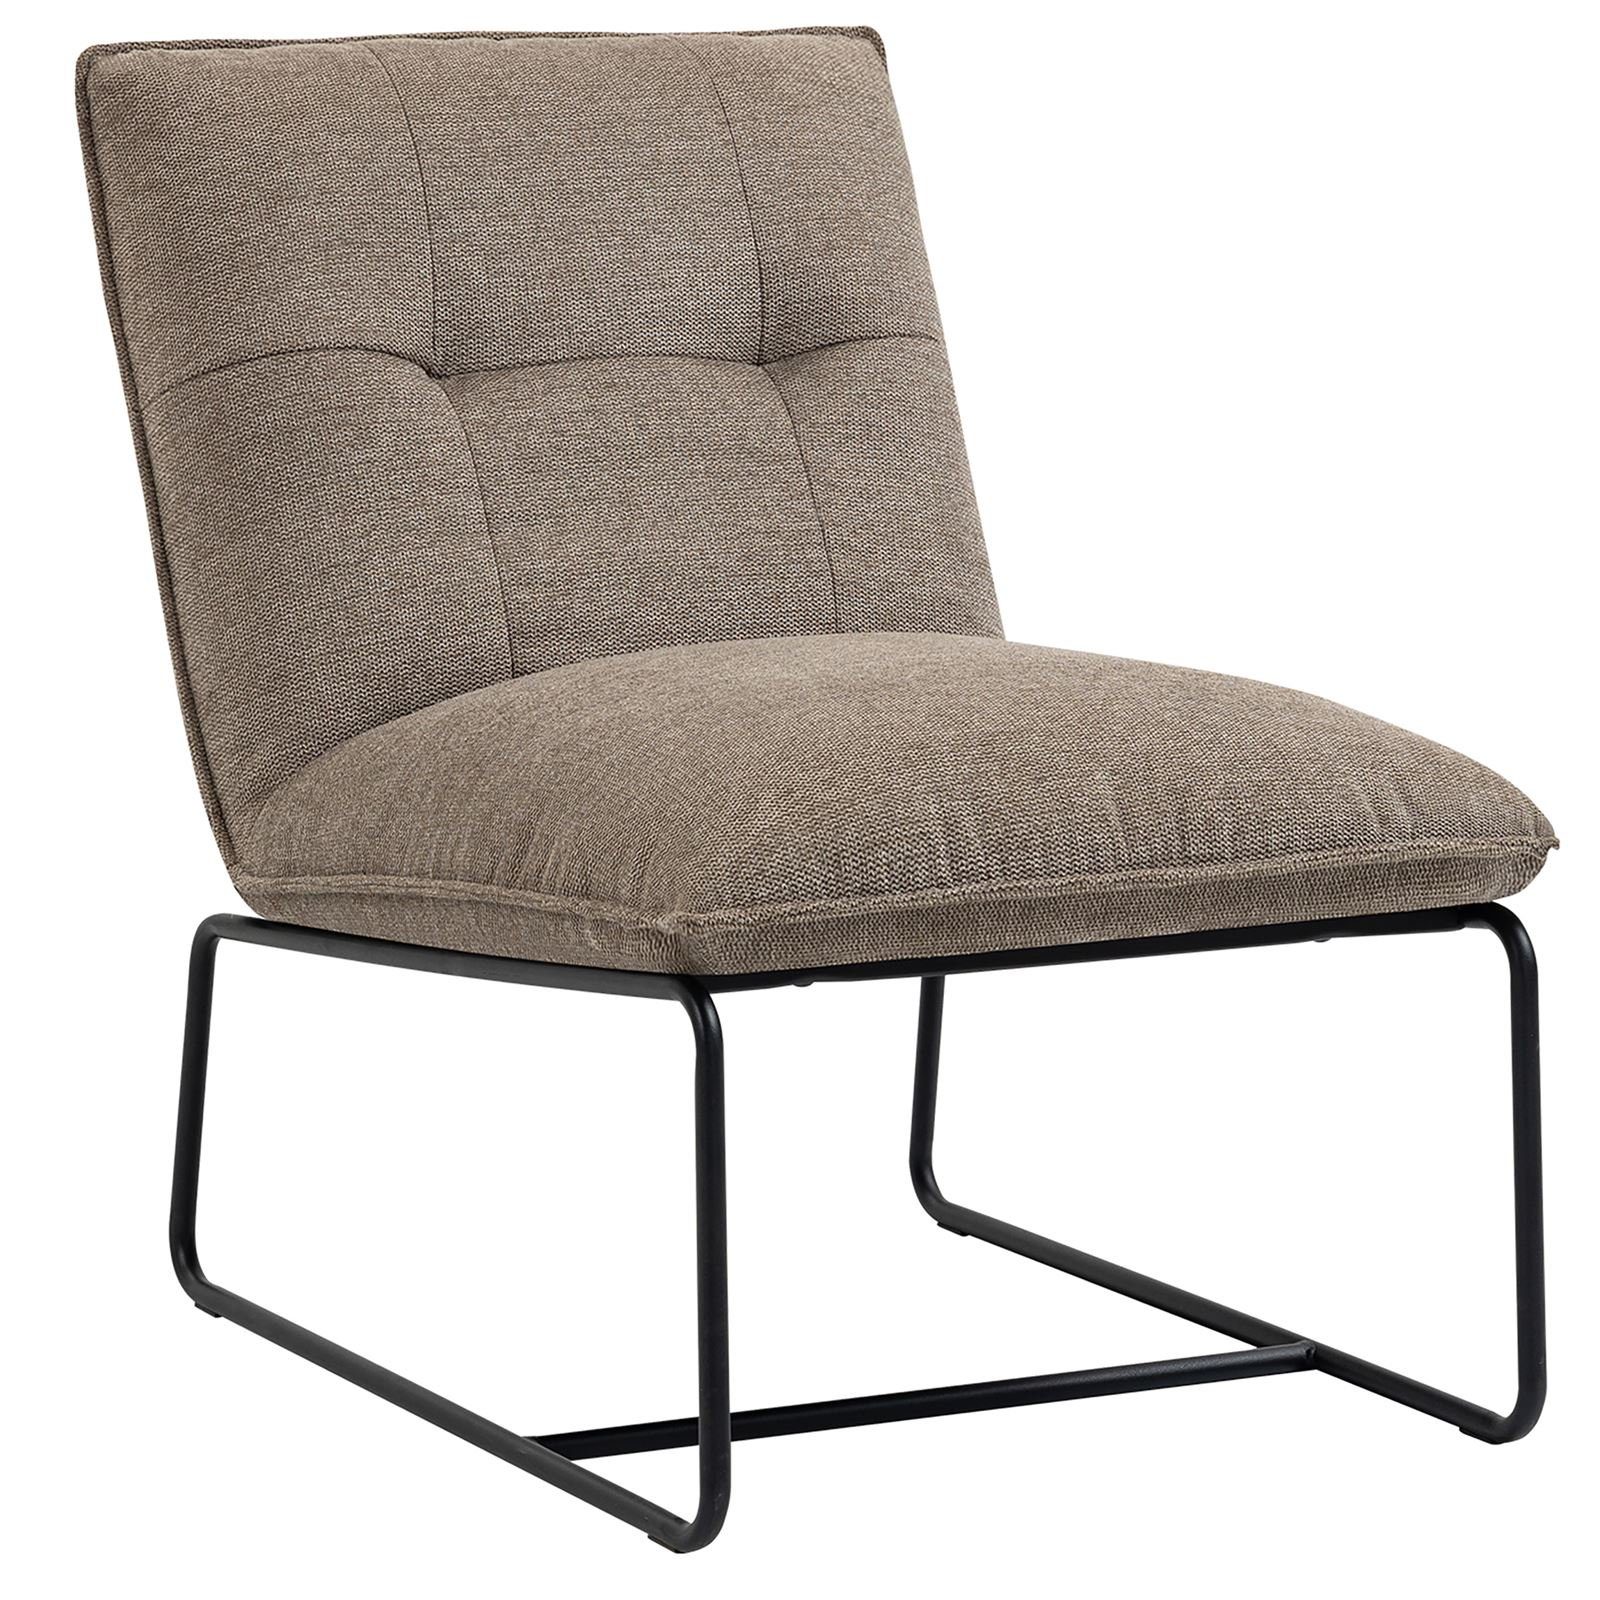 CARO-Möbel Relaxsessel, Relaxsessel Polstersessel Wohnzimmersessel Stoffbezug Metall bequem ze | Sessel